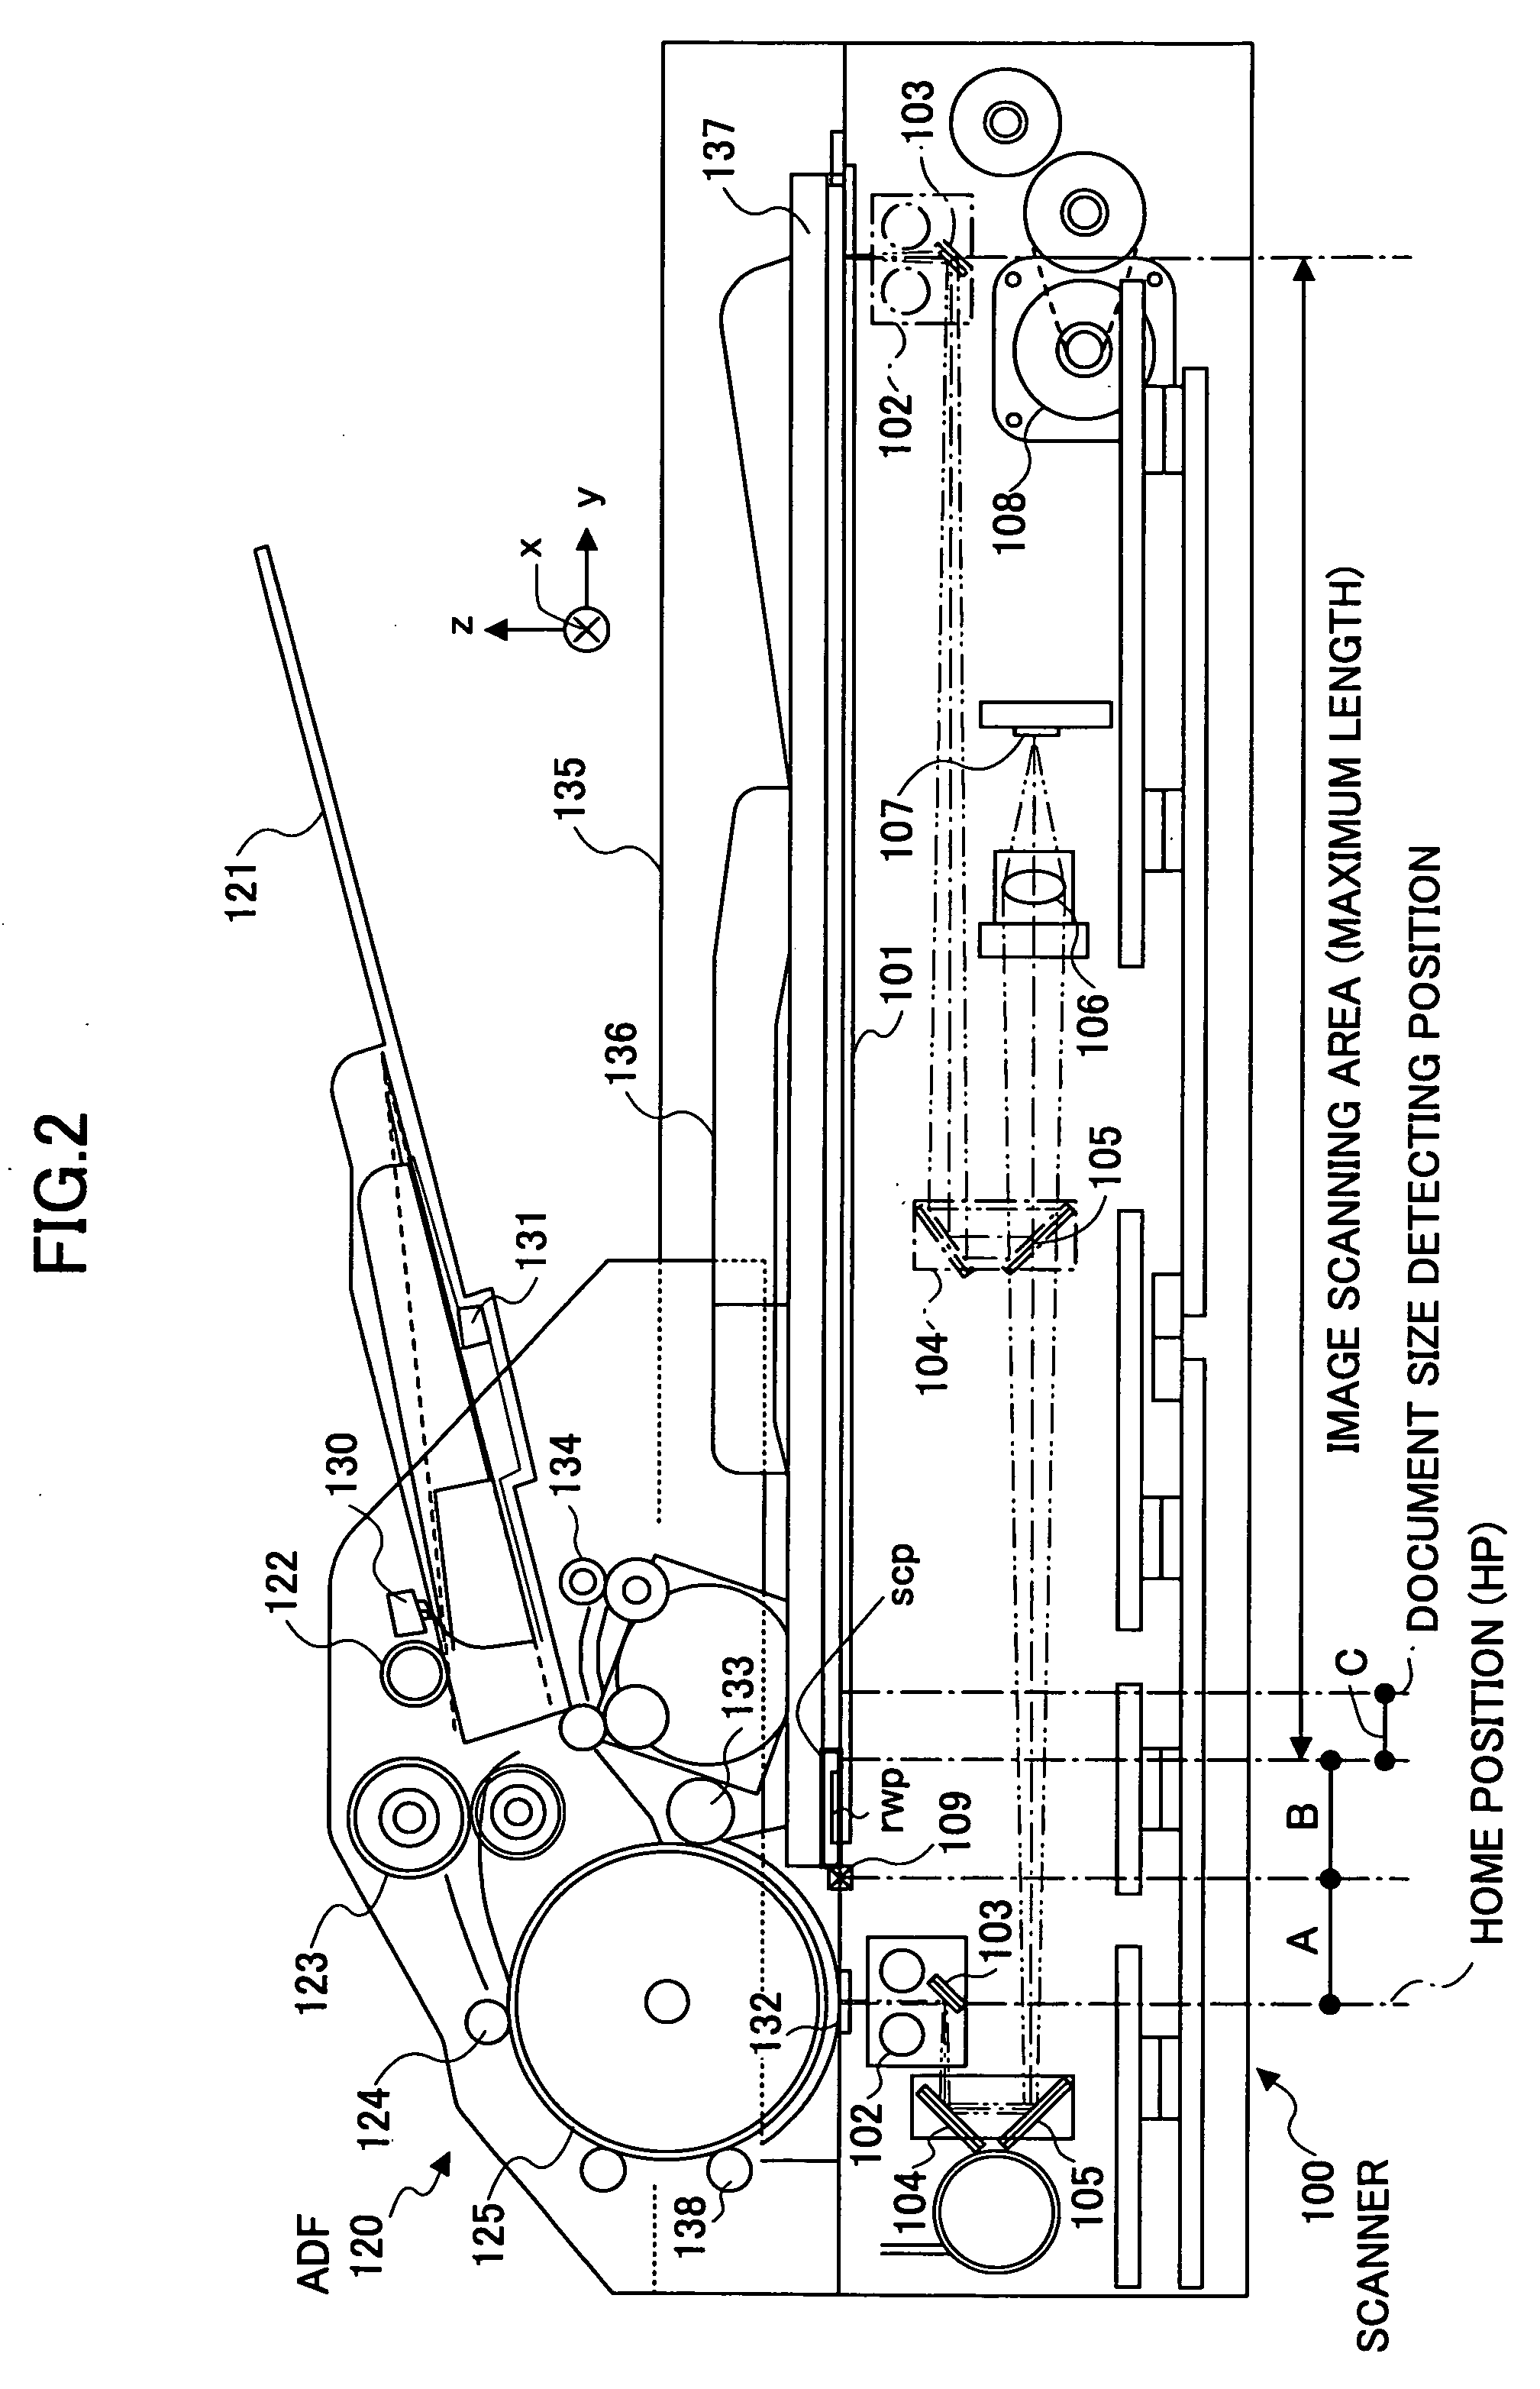 Image reading apparatus and imaging apparatus